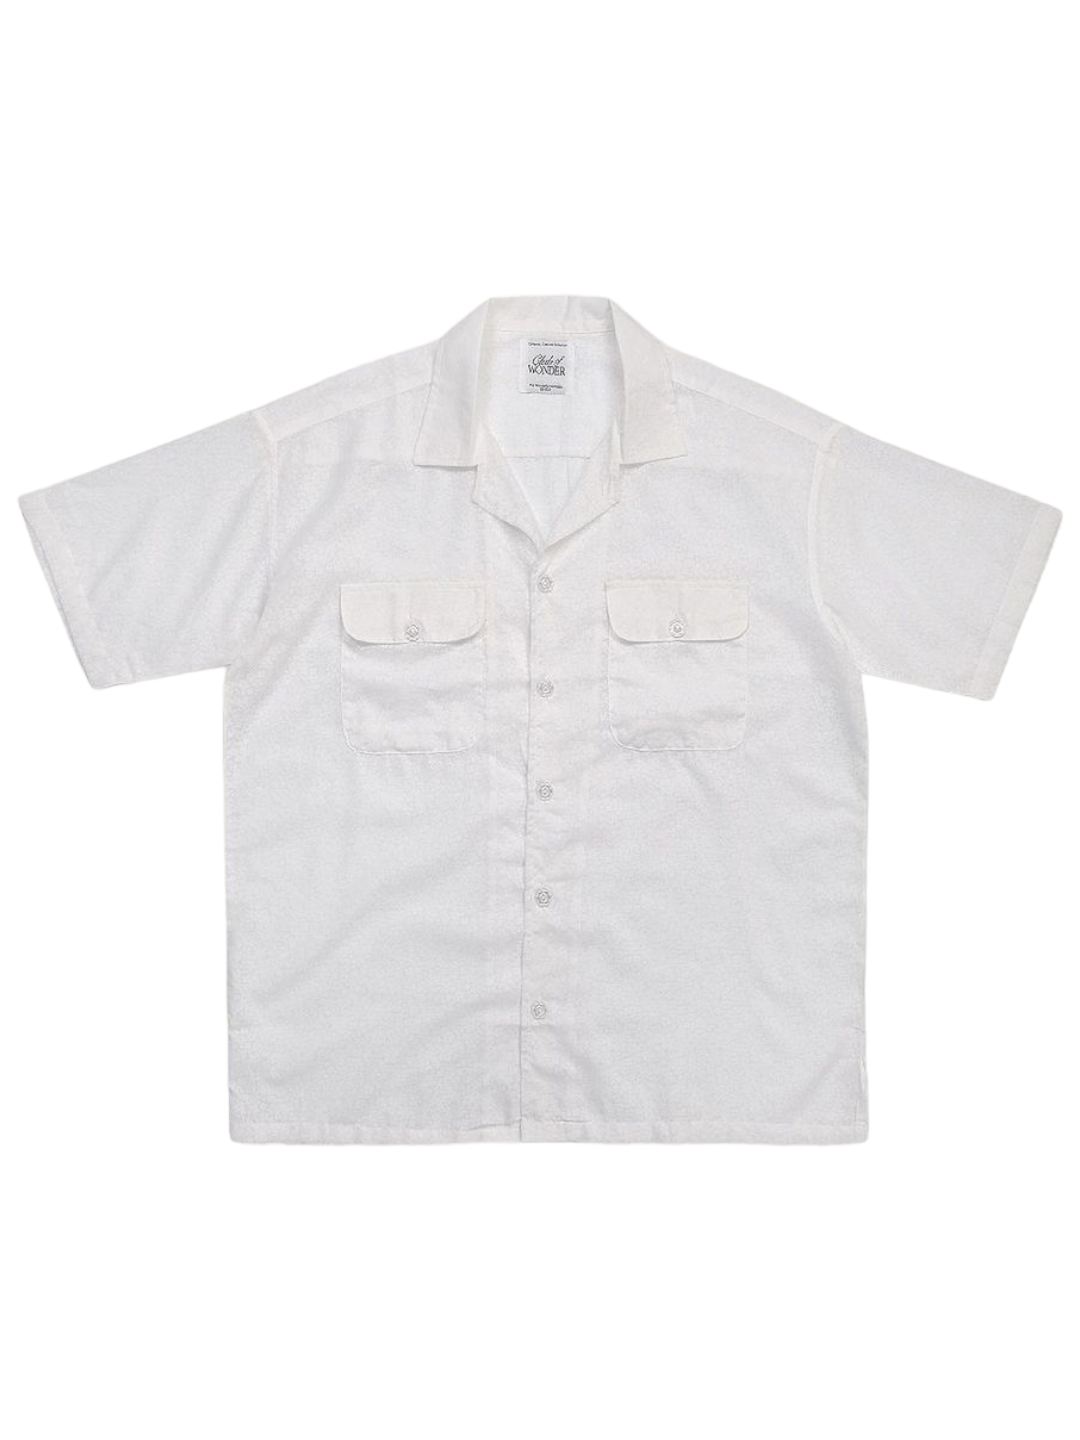 CLUB ✿ 01 Floral-Sheer Resort Shirt in White